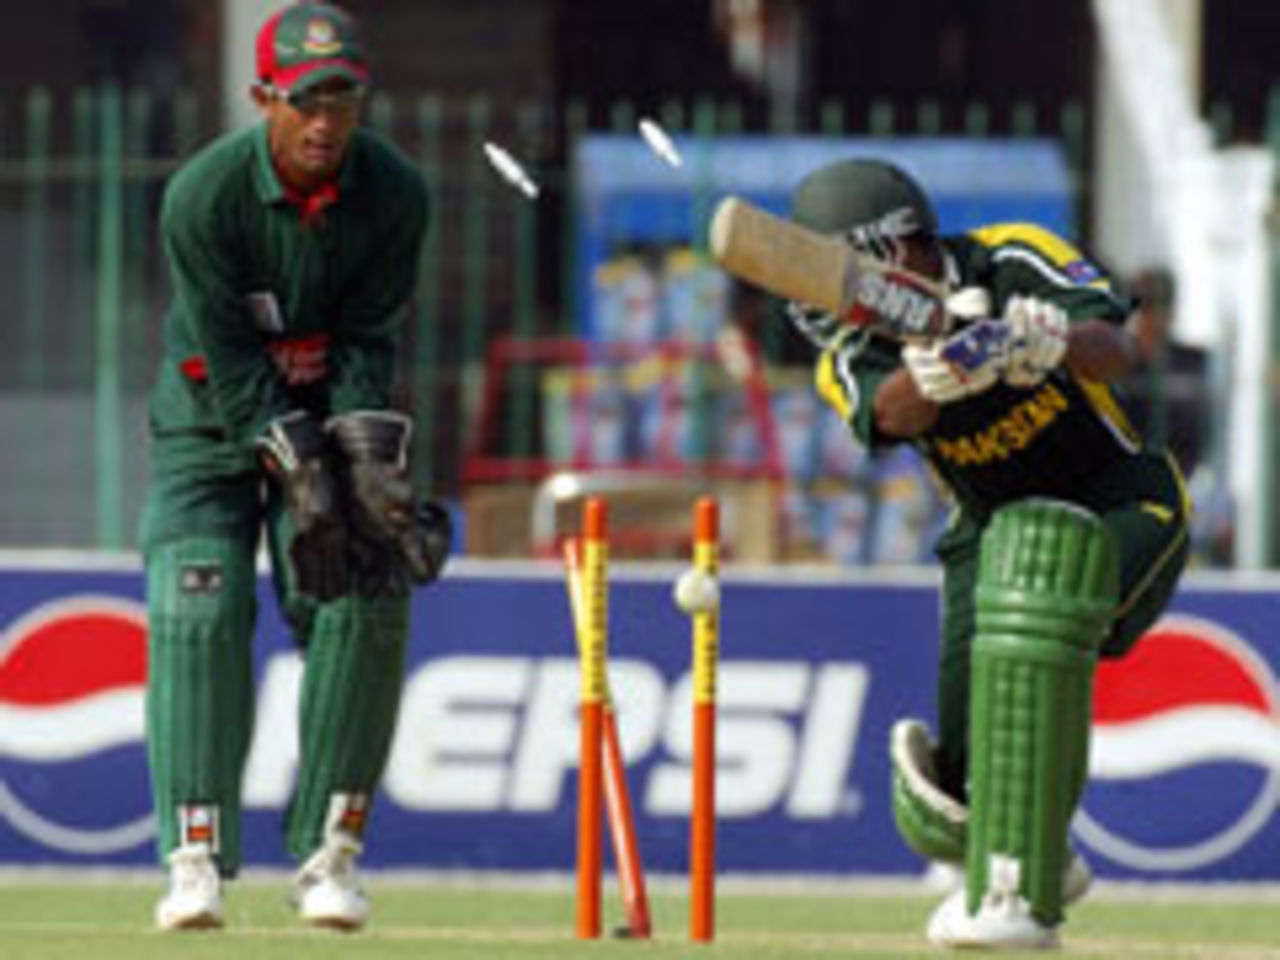 Yousuf Youhana is bowled for 65 as wicketkeeper Khaled Mashud looks on, Pak v Bang, 3rd ODI, Lahore, September 15, 2003.